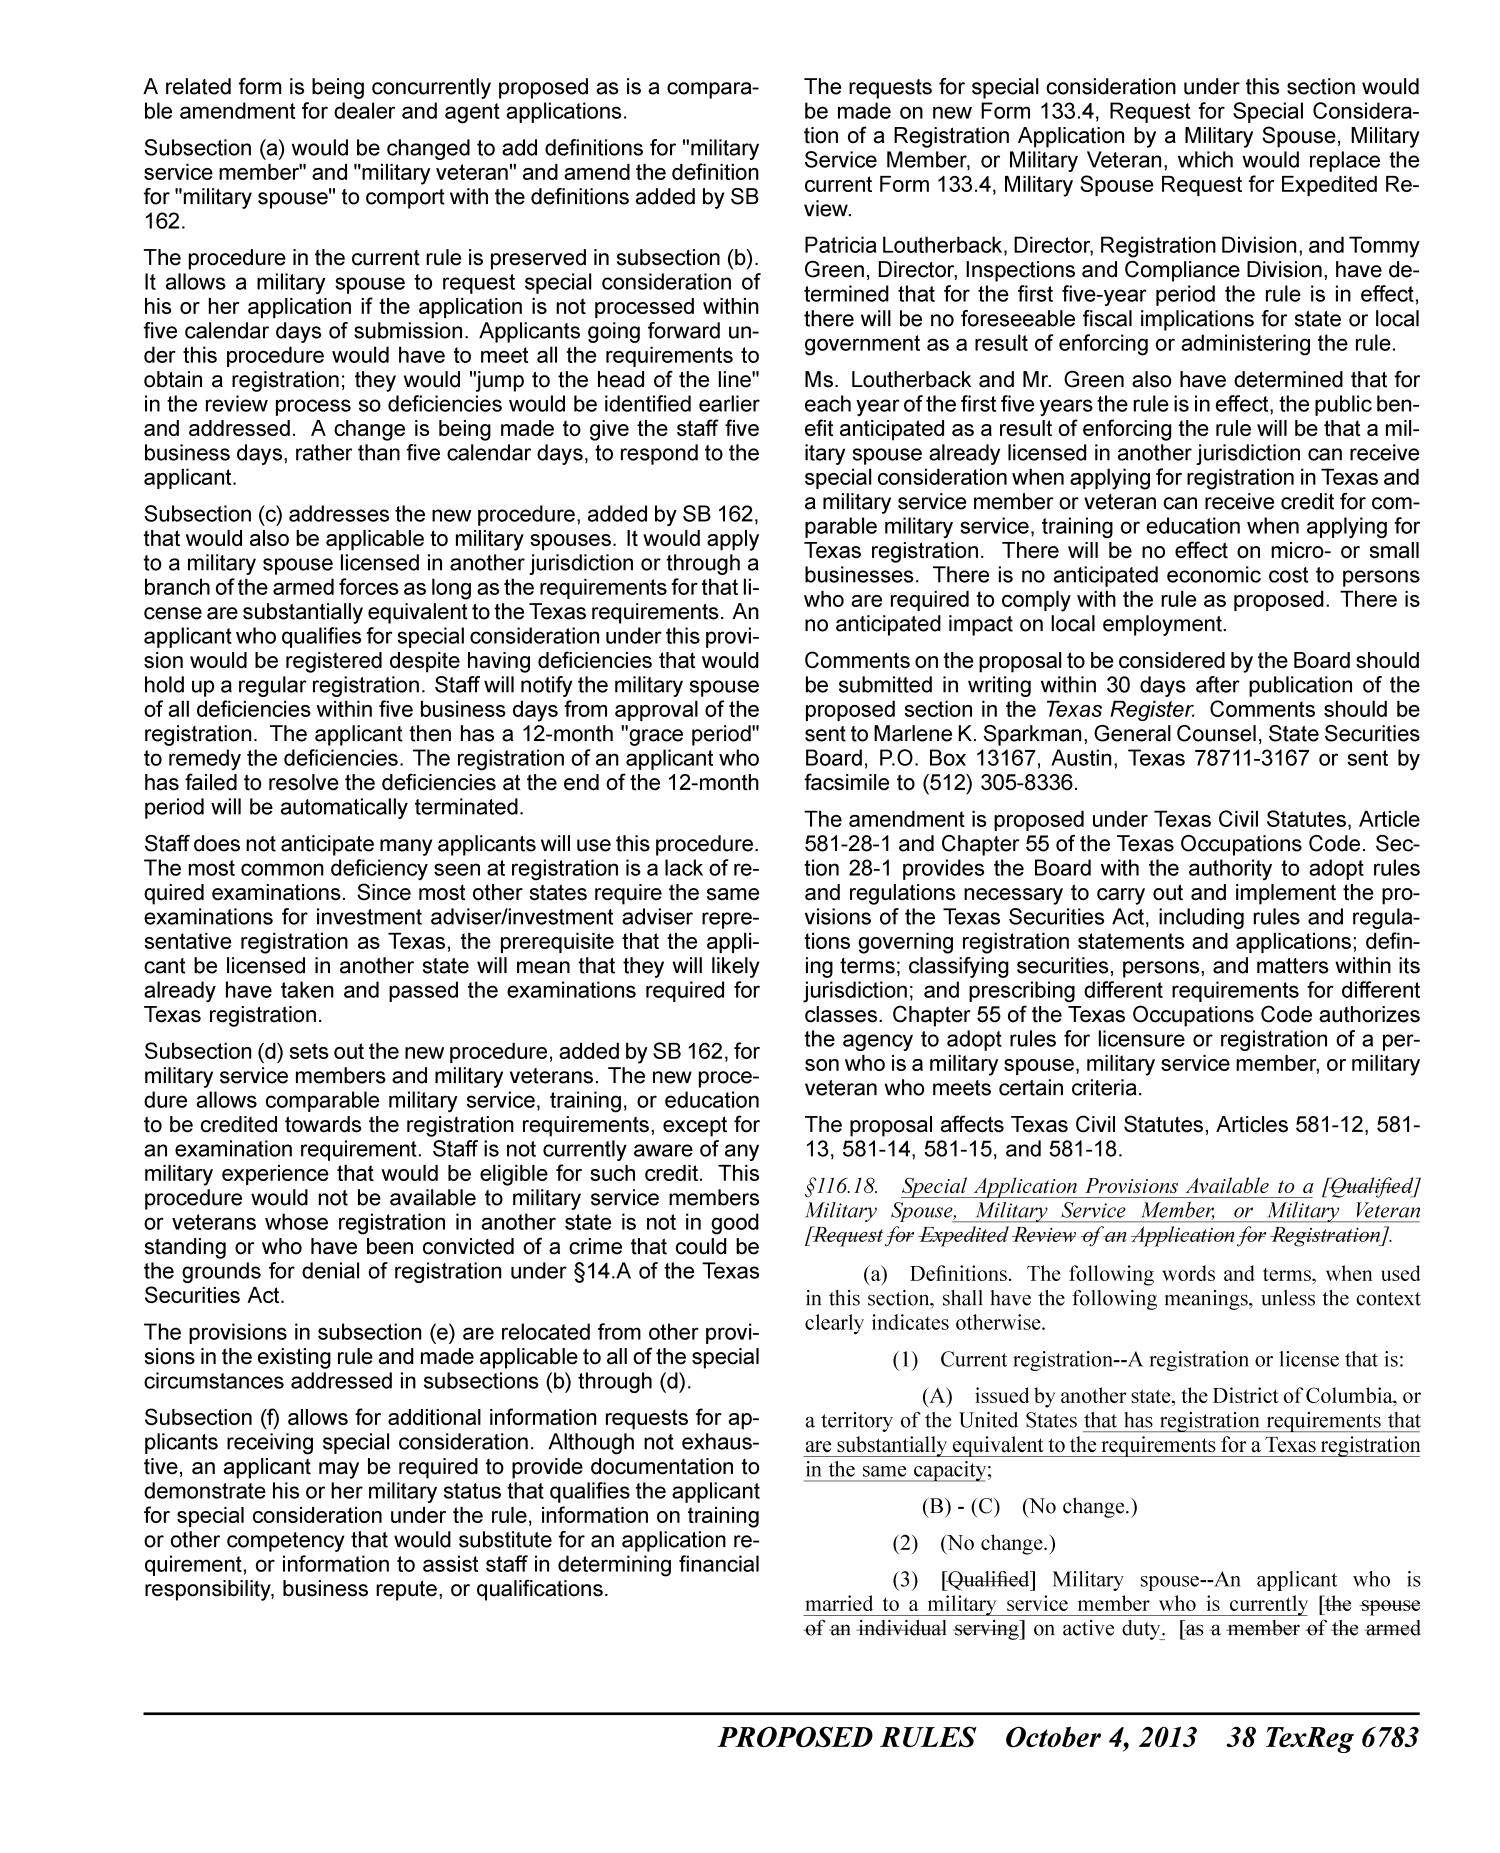 Texas Register, Volume 38, Number 40, Pages 6747-6996, October 4, 2013
                                                
                                                    6783
                                                